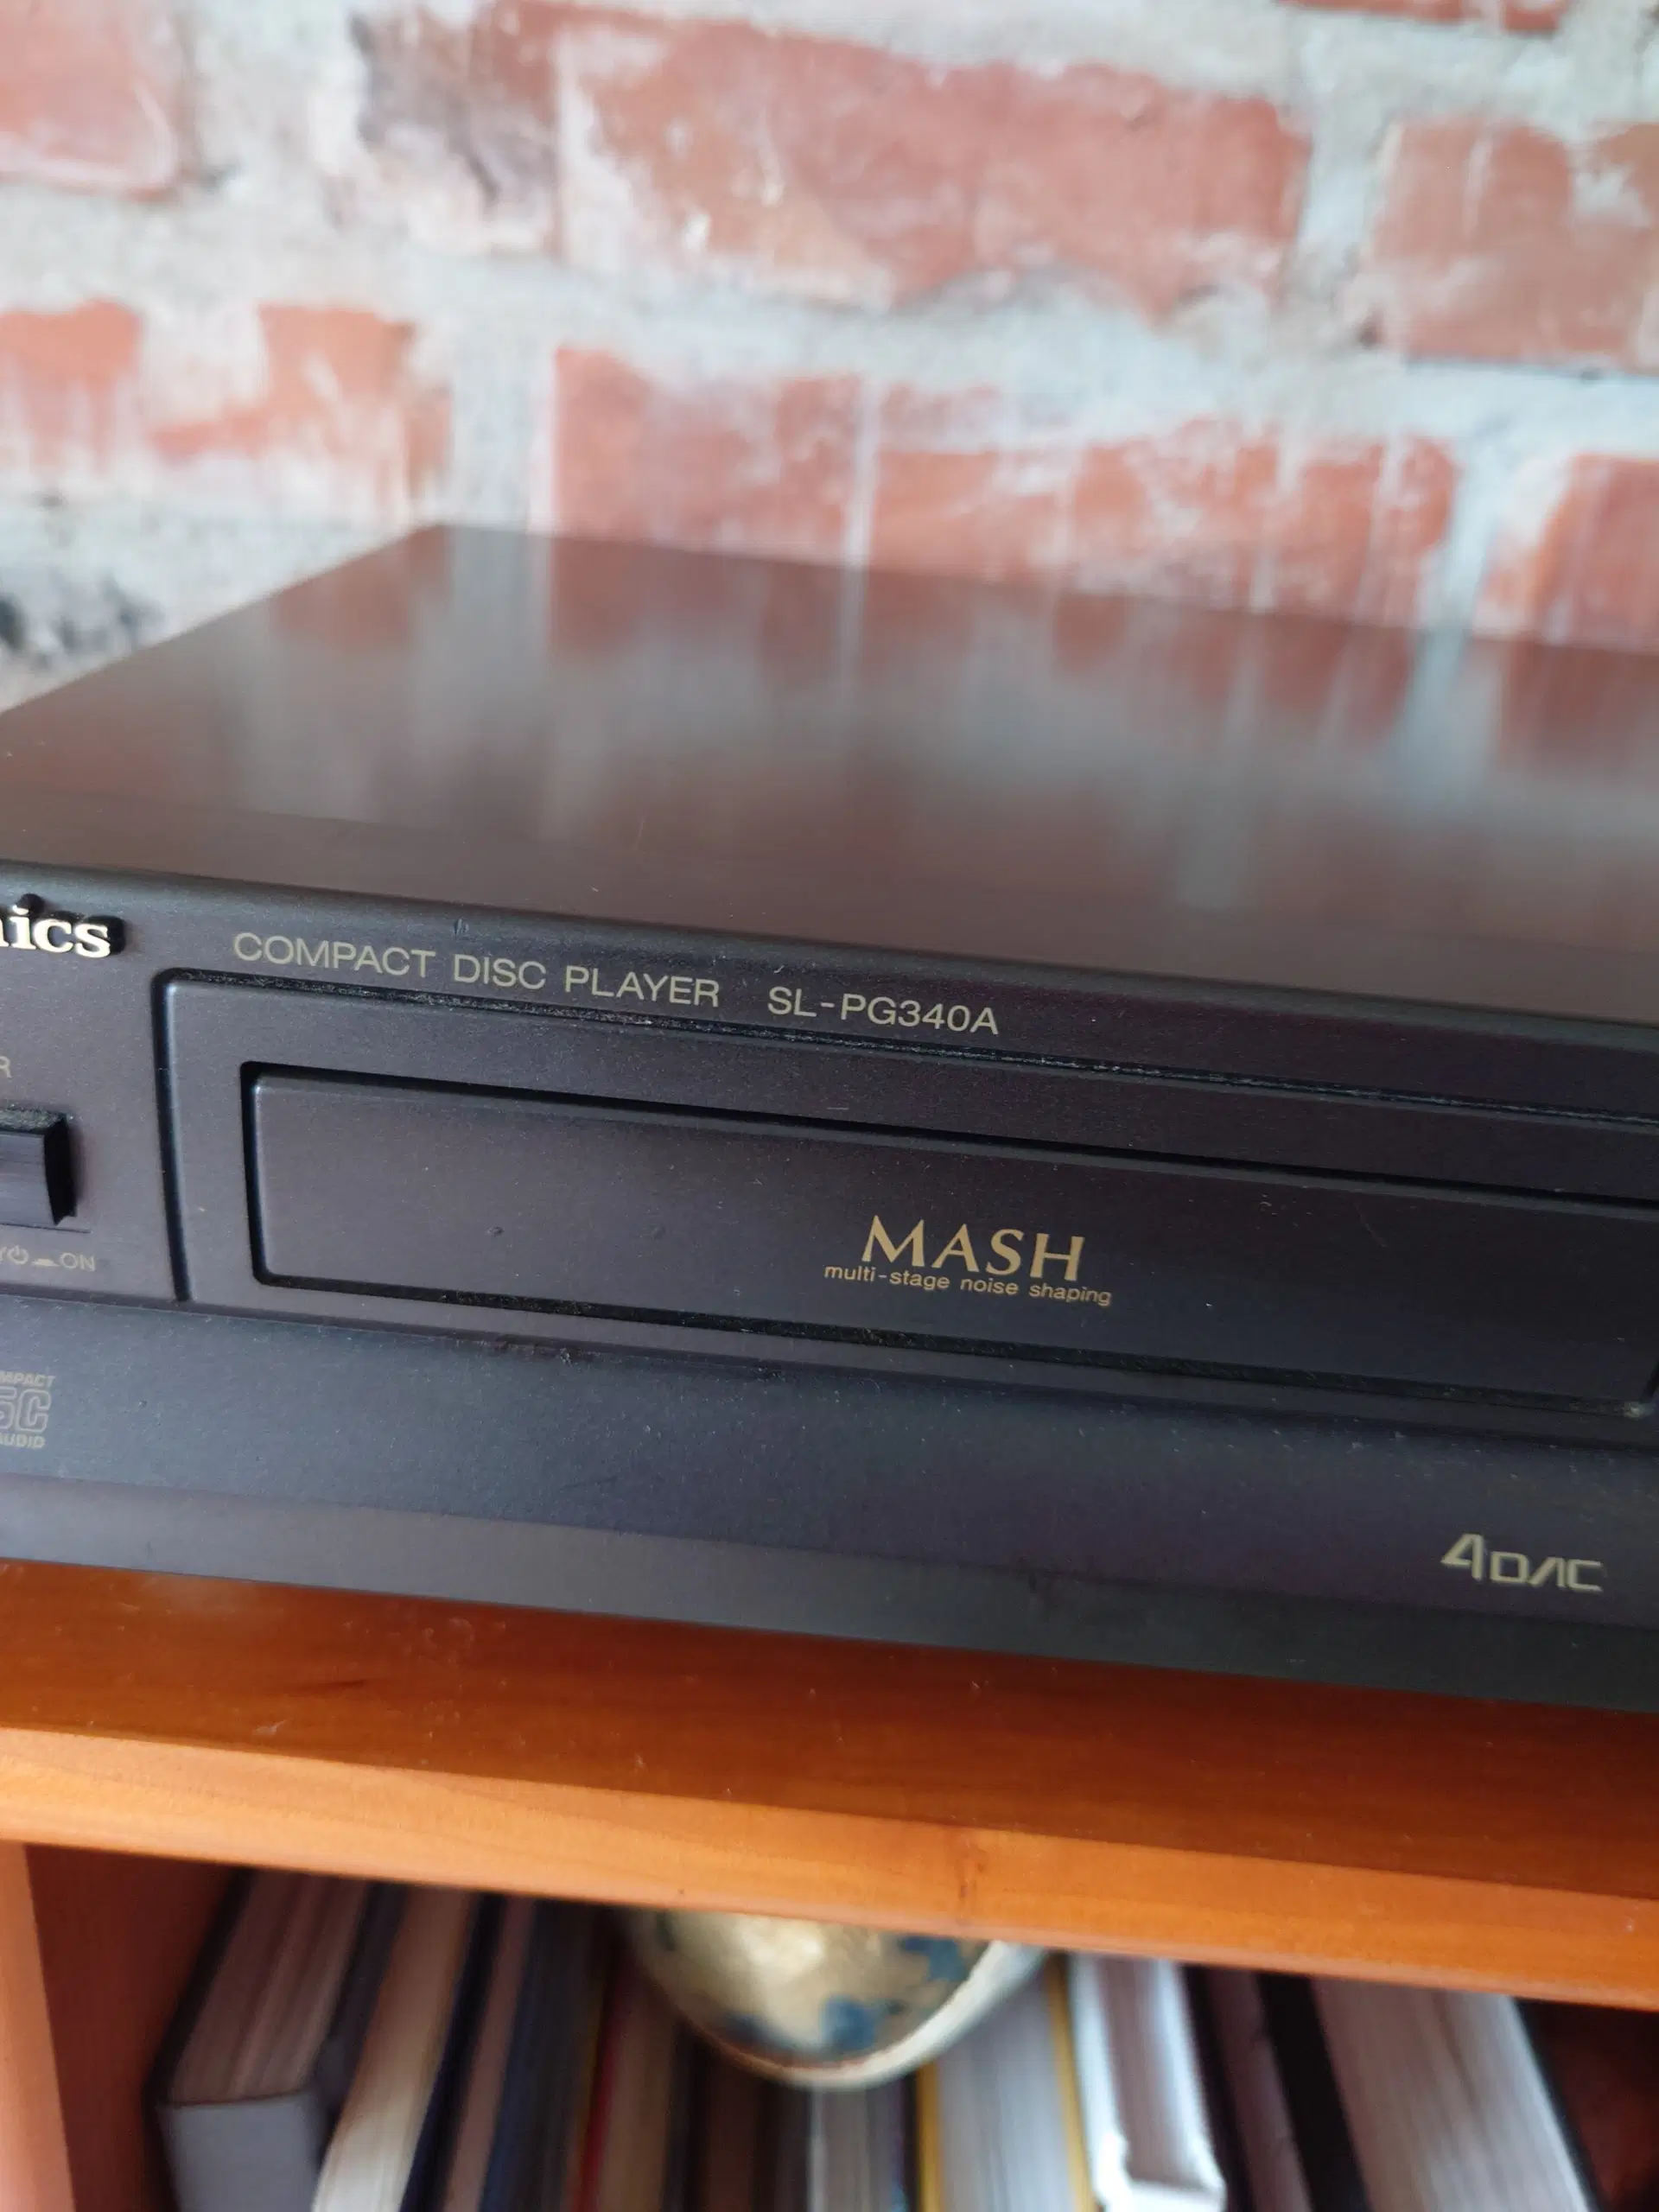 Technics MASH Compact disc player SL-PG340A